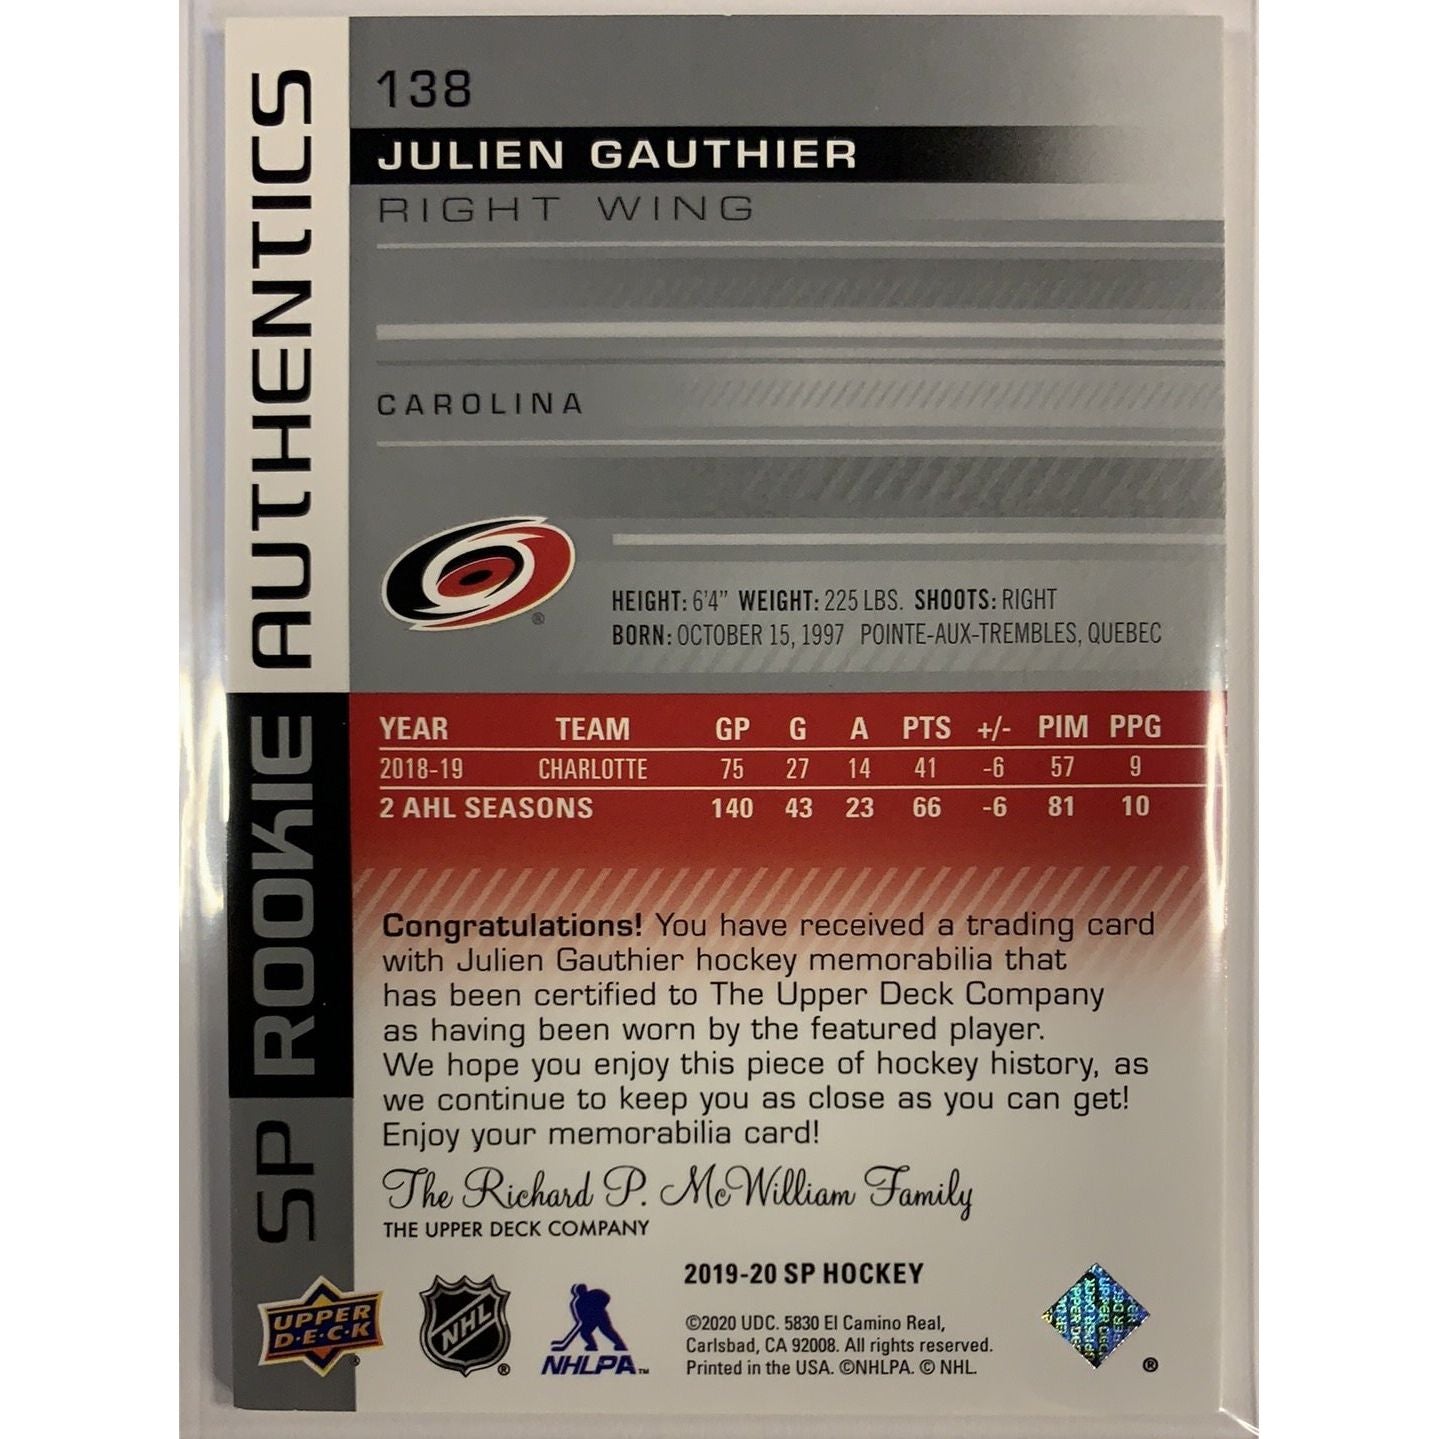  2019-20 SP Julien Gauthier Rookie Authentics Jersey Patch  Local Legends Cards & Collectibles